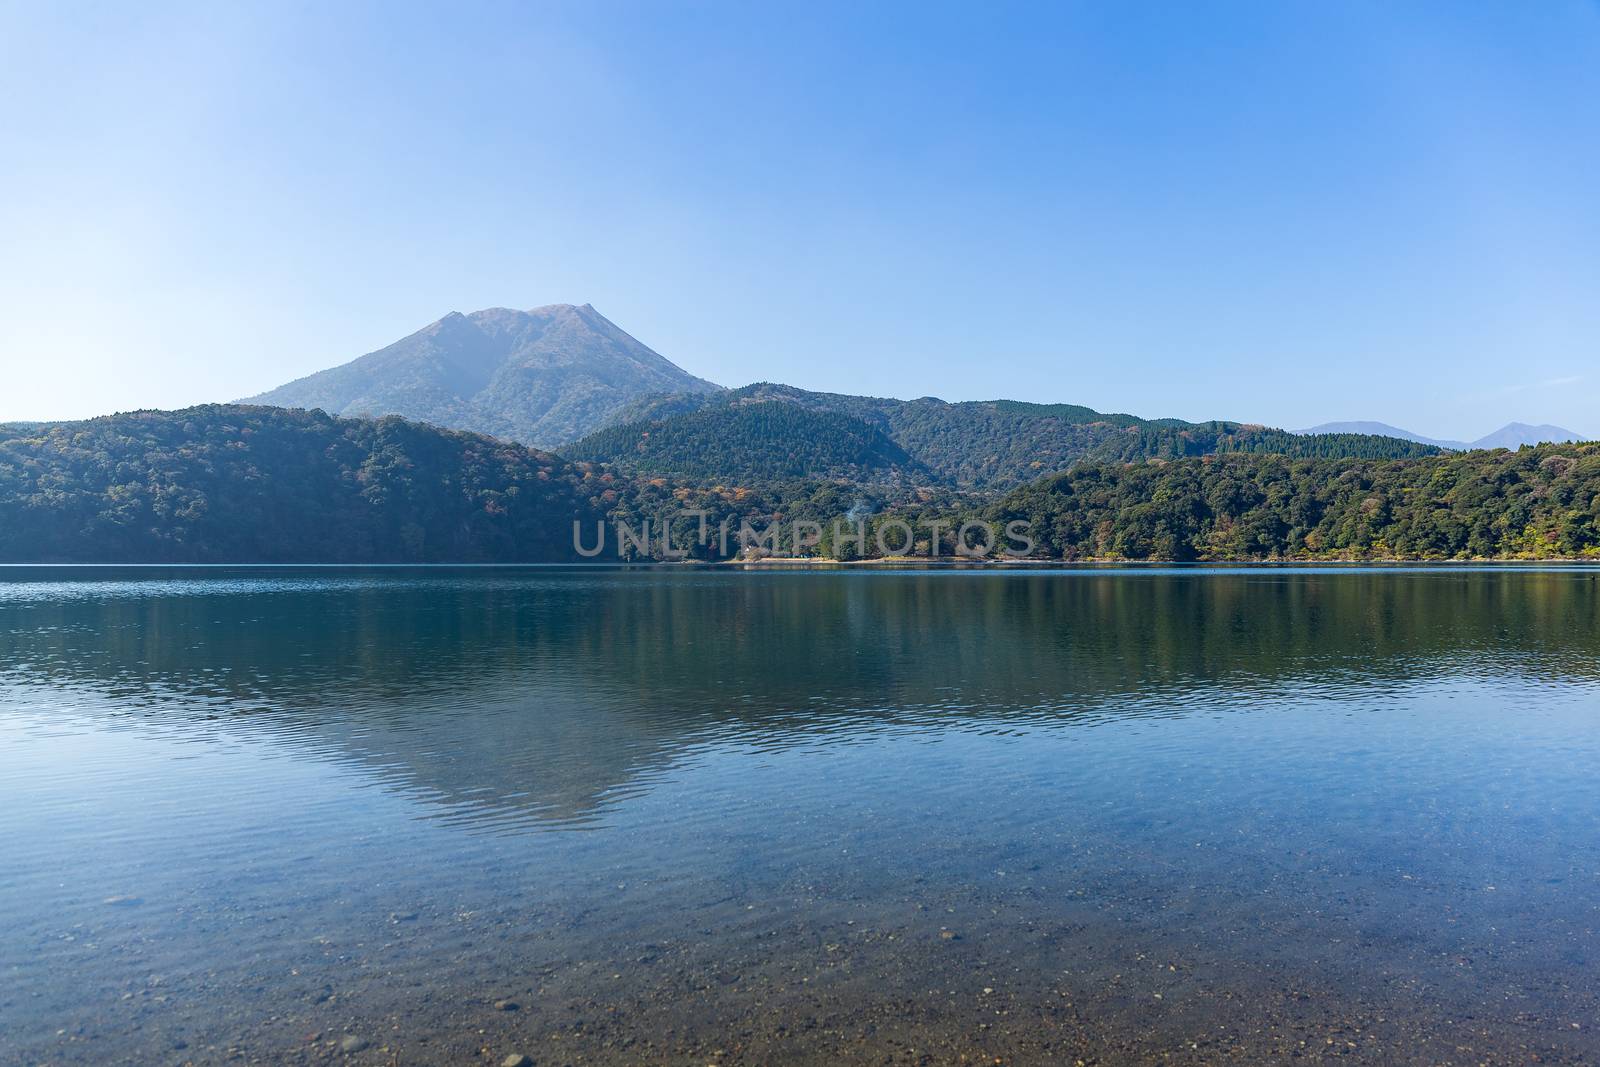 Mount Kirishima and lake